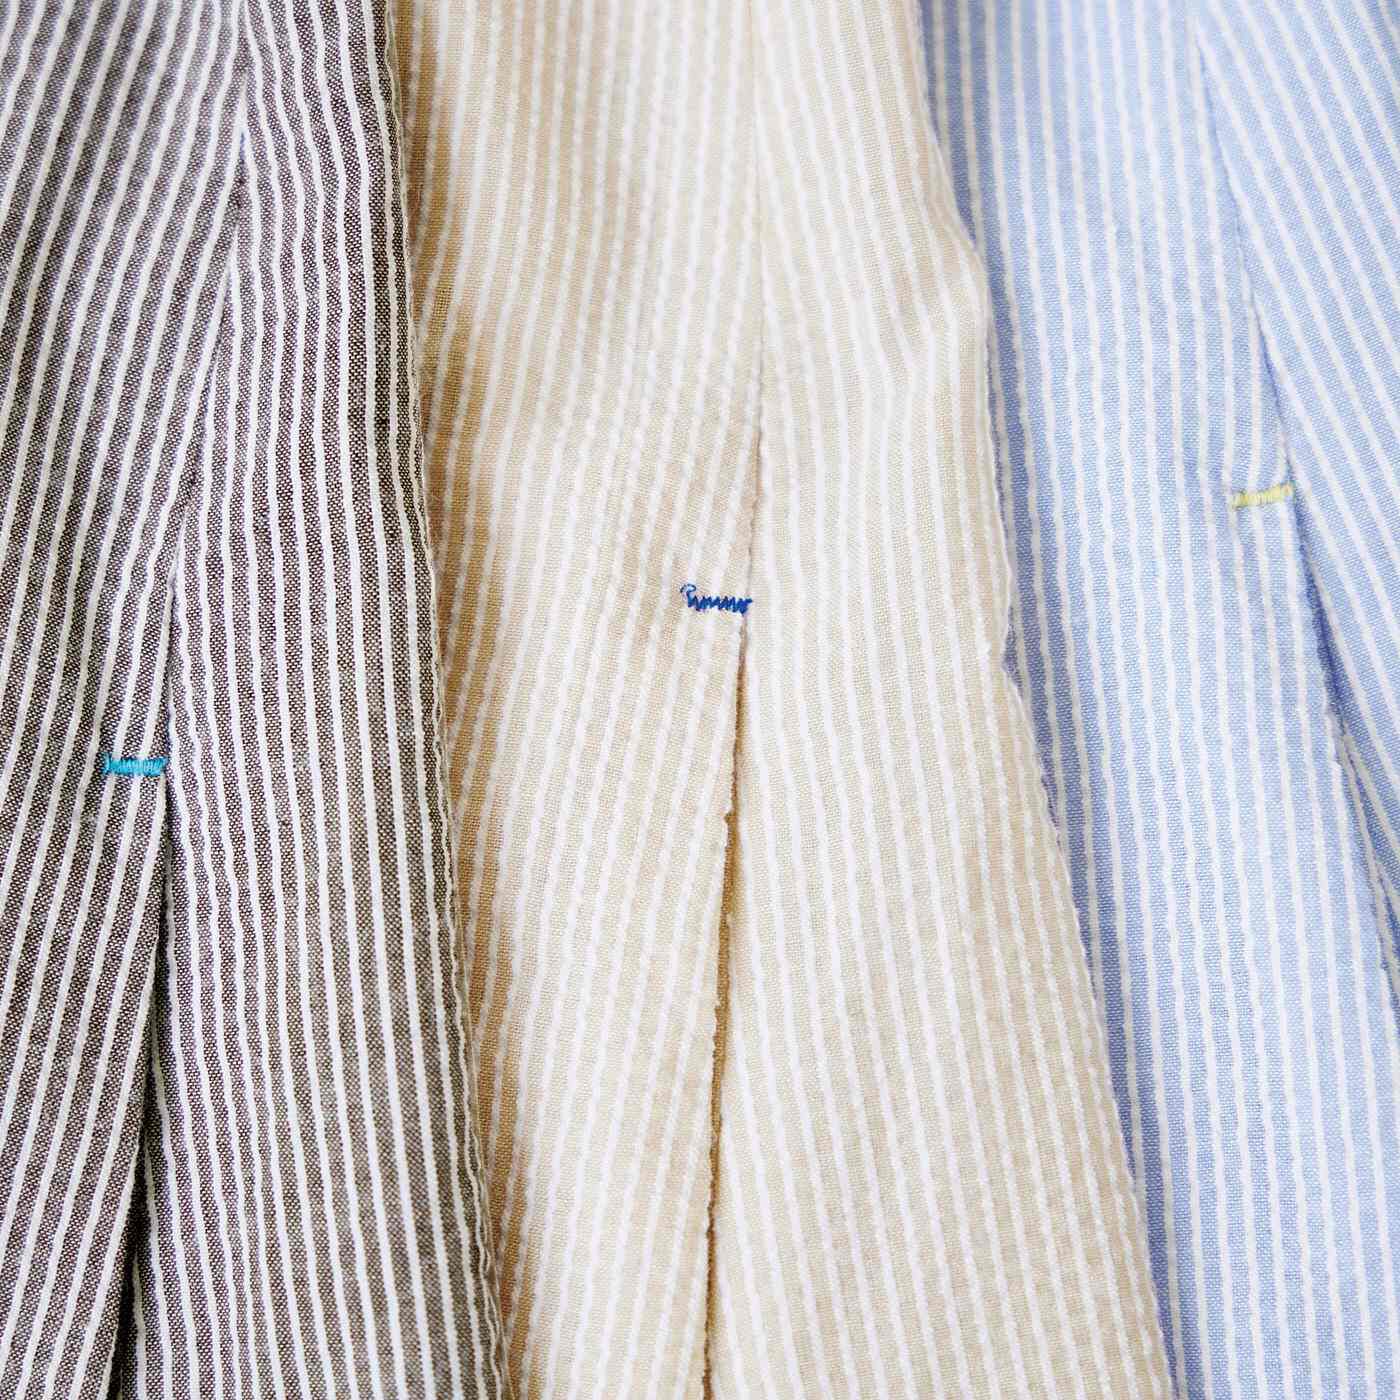 frauglatt|フラウグラット　ふわぽこサッカーストライプの らくちんきれい涼やかなプルオーバーチュニックシャツの会|両サイドのポケット口に付いた配色ステッチもかわいい。